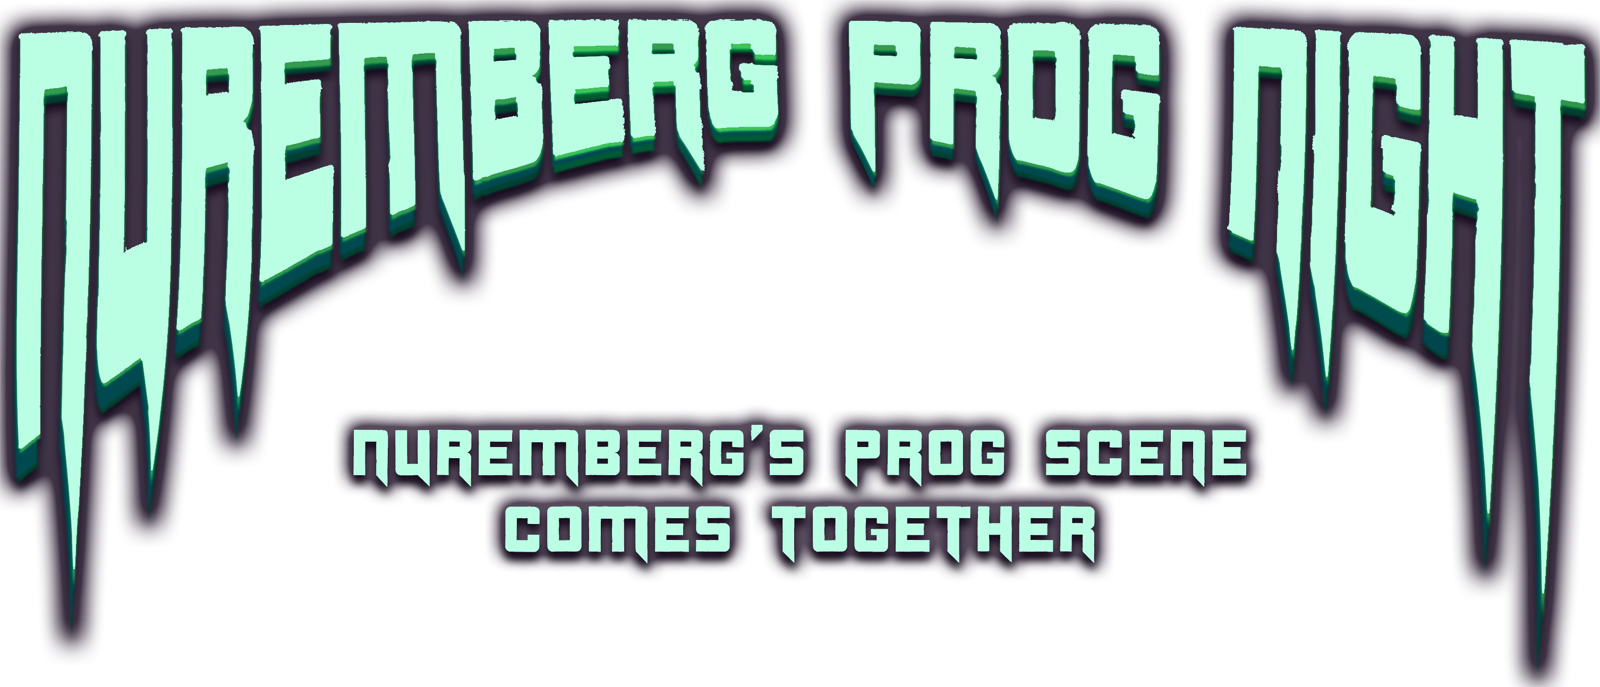 Nuremberg Prog Night 2023 logo with tagline en